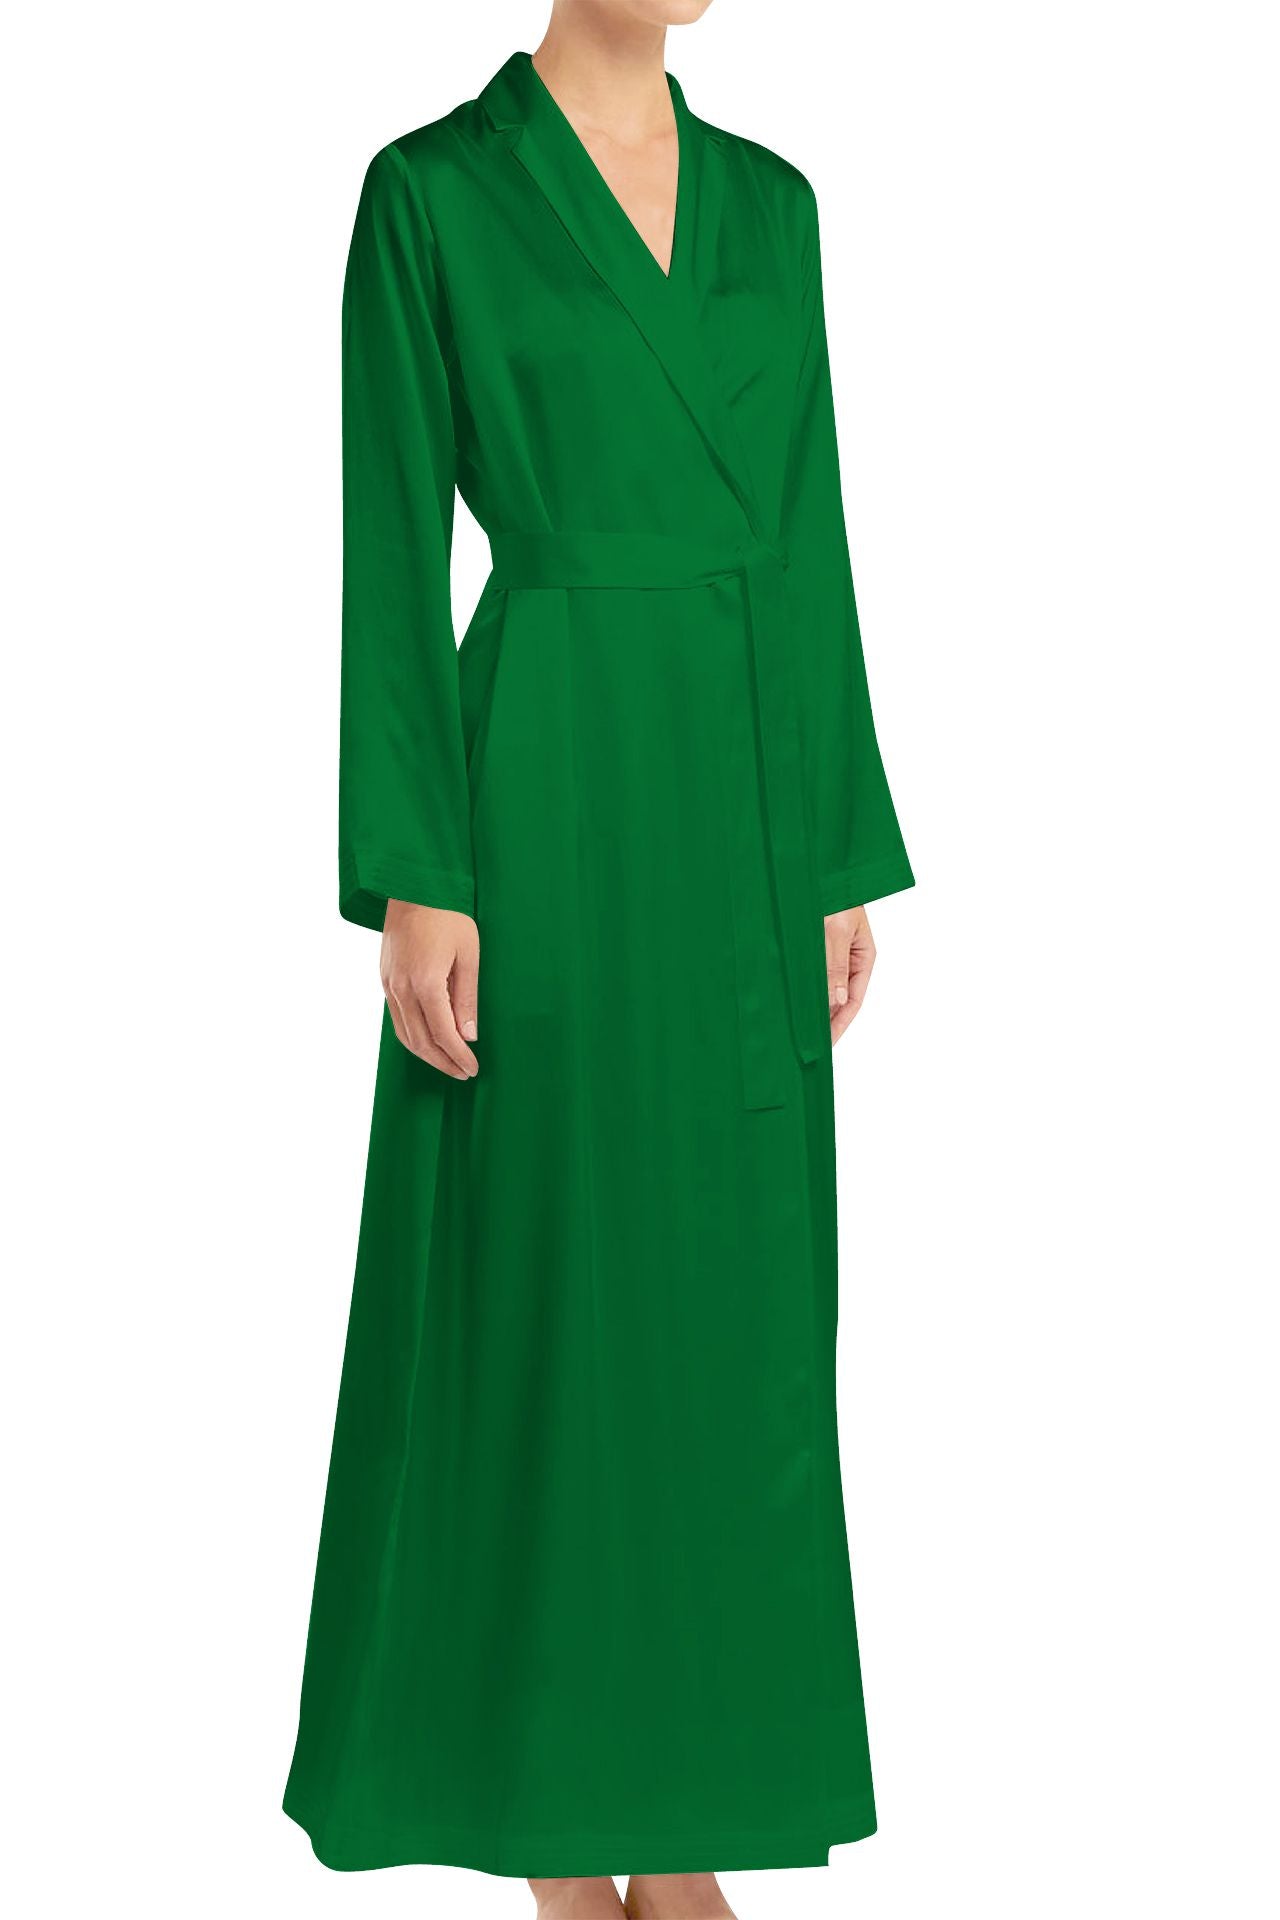 "green wrap dress plus size" "wrap dress maxi long sleeve" "Kyle X Shahida" "wrap dress emerald green"